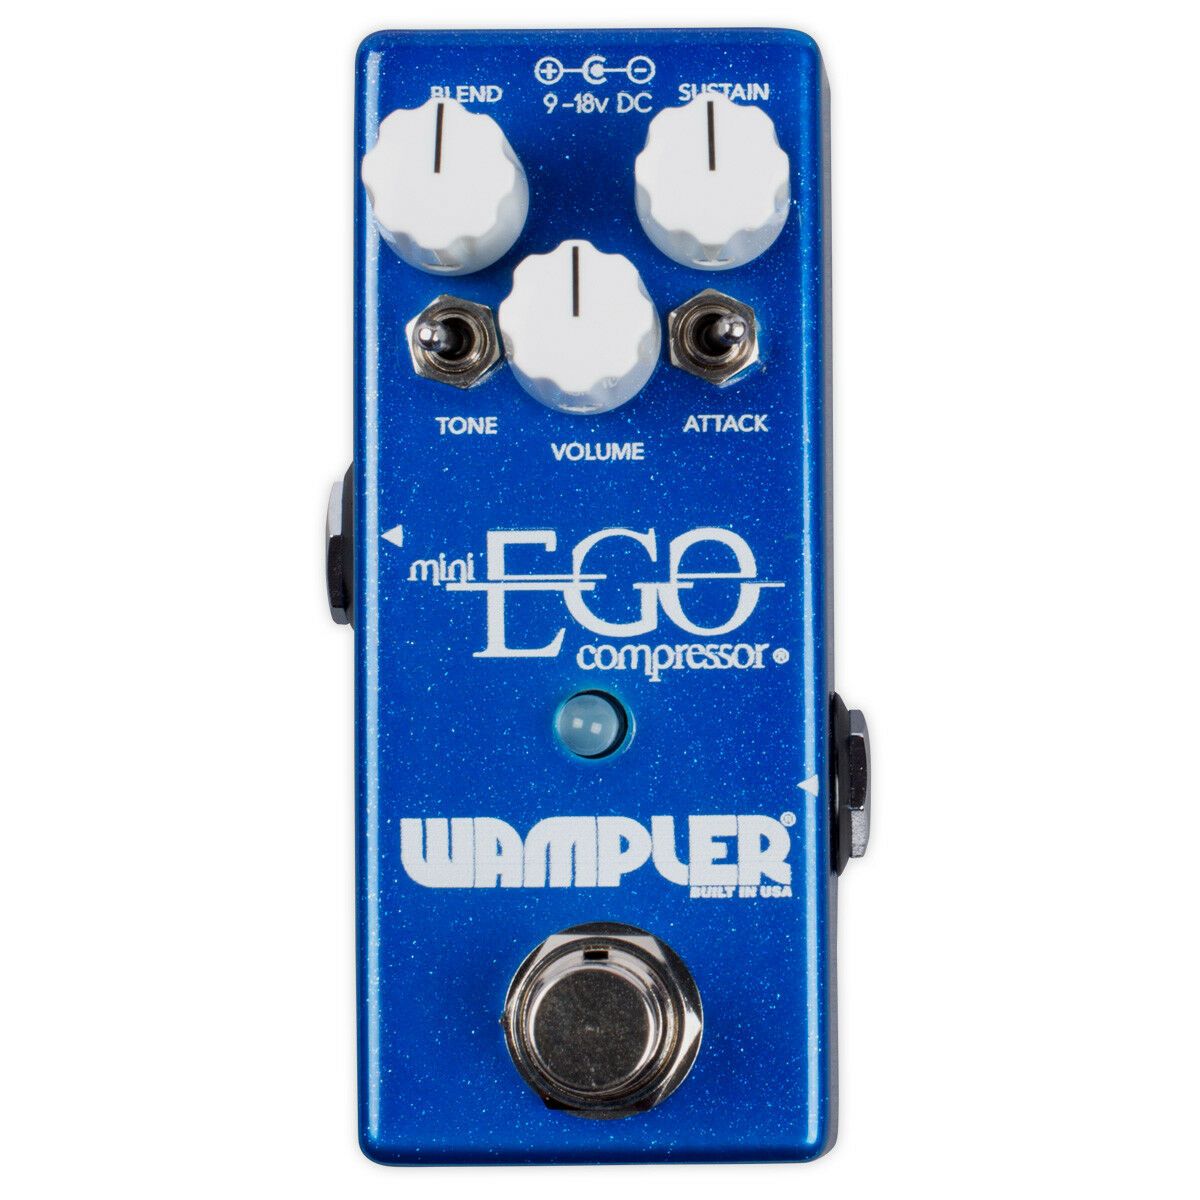 New Wampler Mini Ego Compressor | Guitar Effects Pedal | Bundle